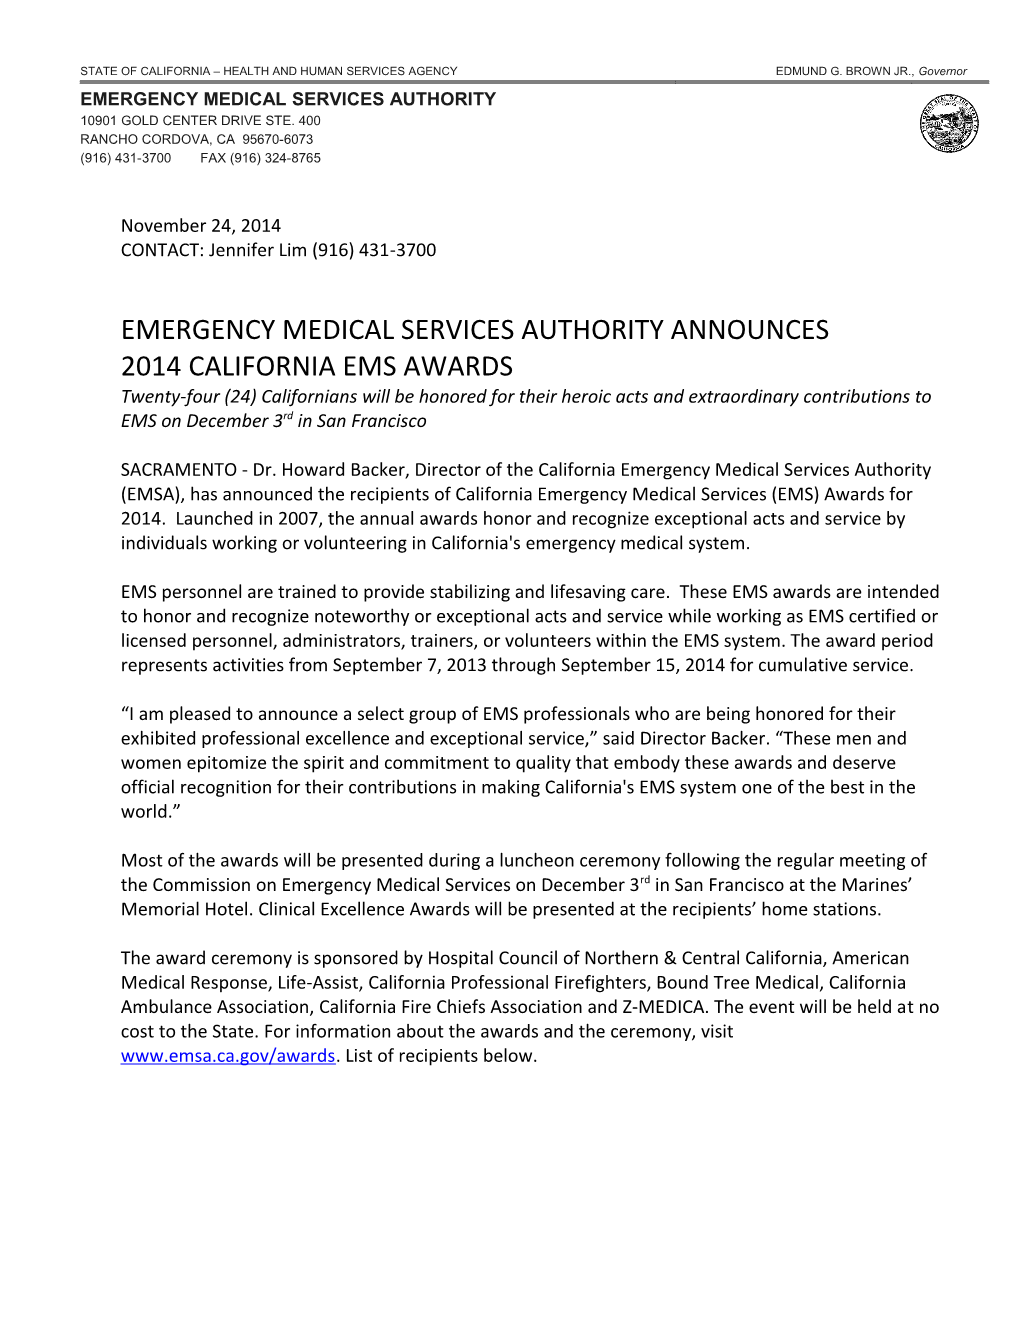 Emergency Medical Services Authorityannounces